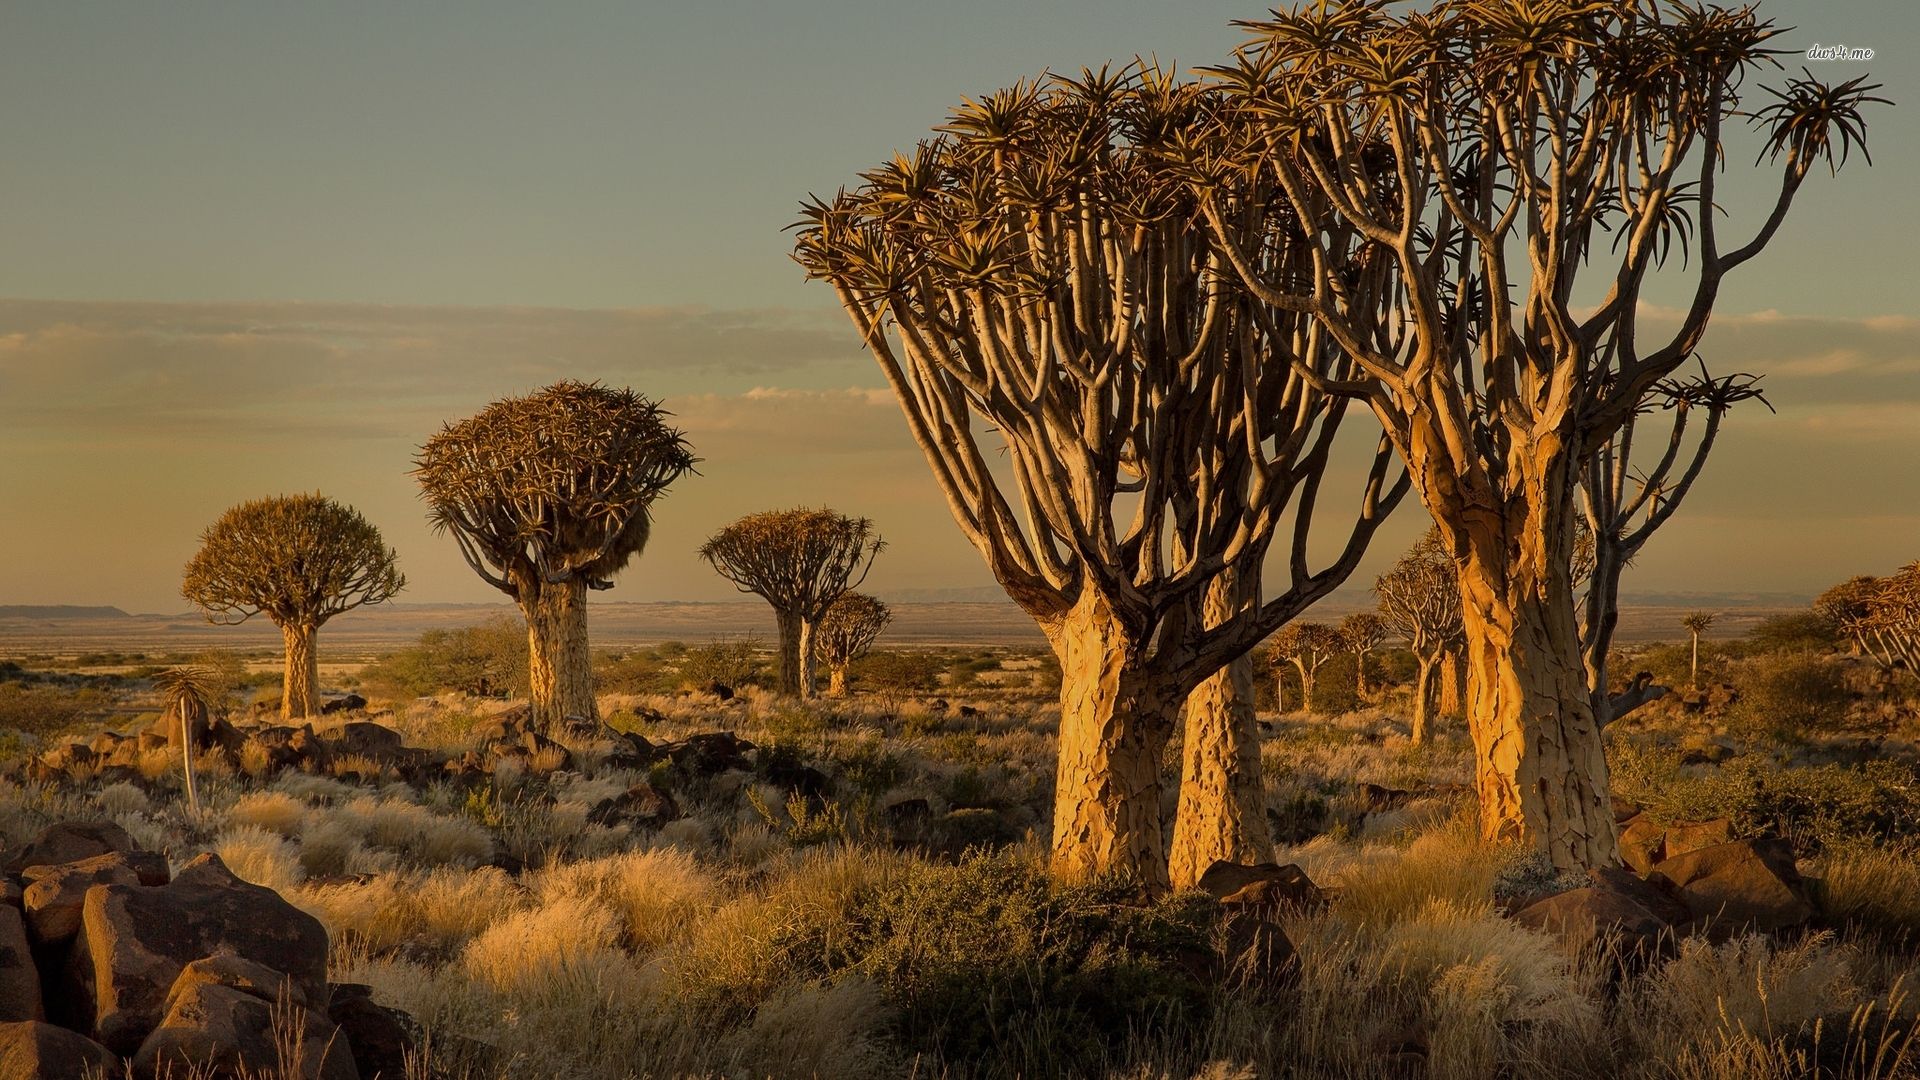 Interesting trees in the desert wallpaper - Nature wallpapers -